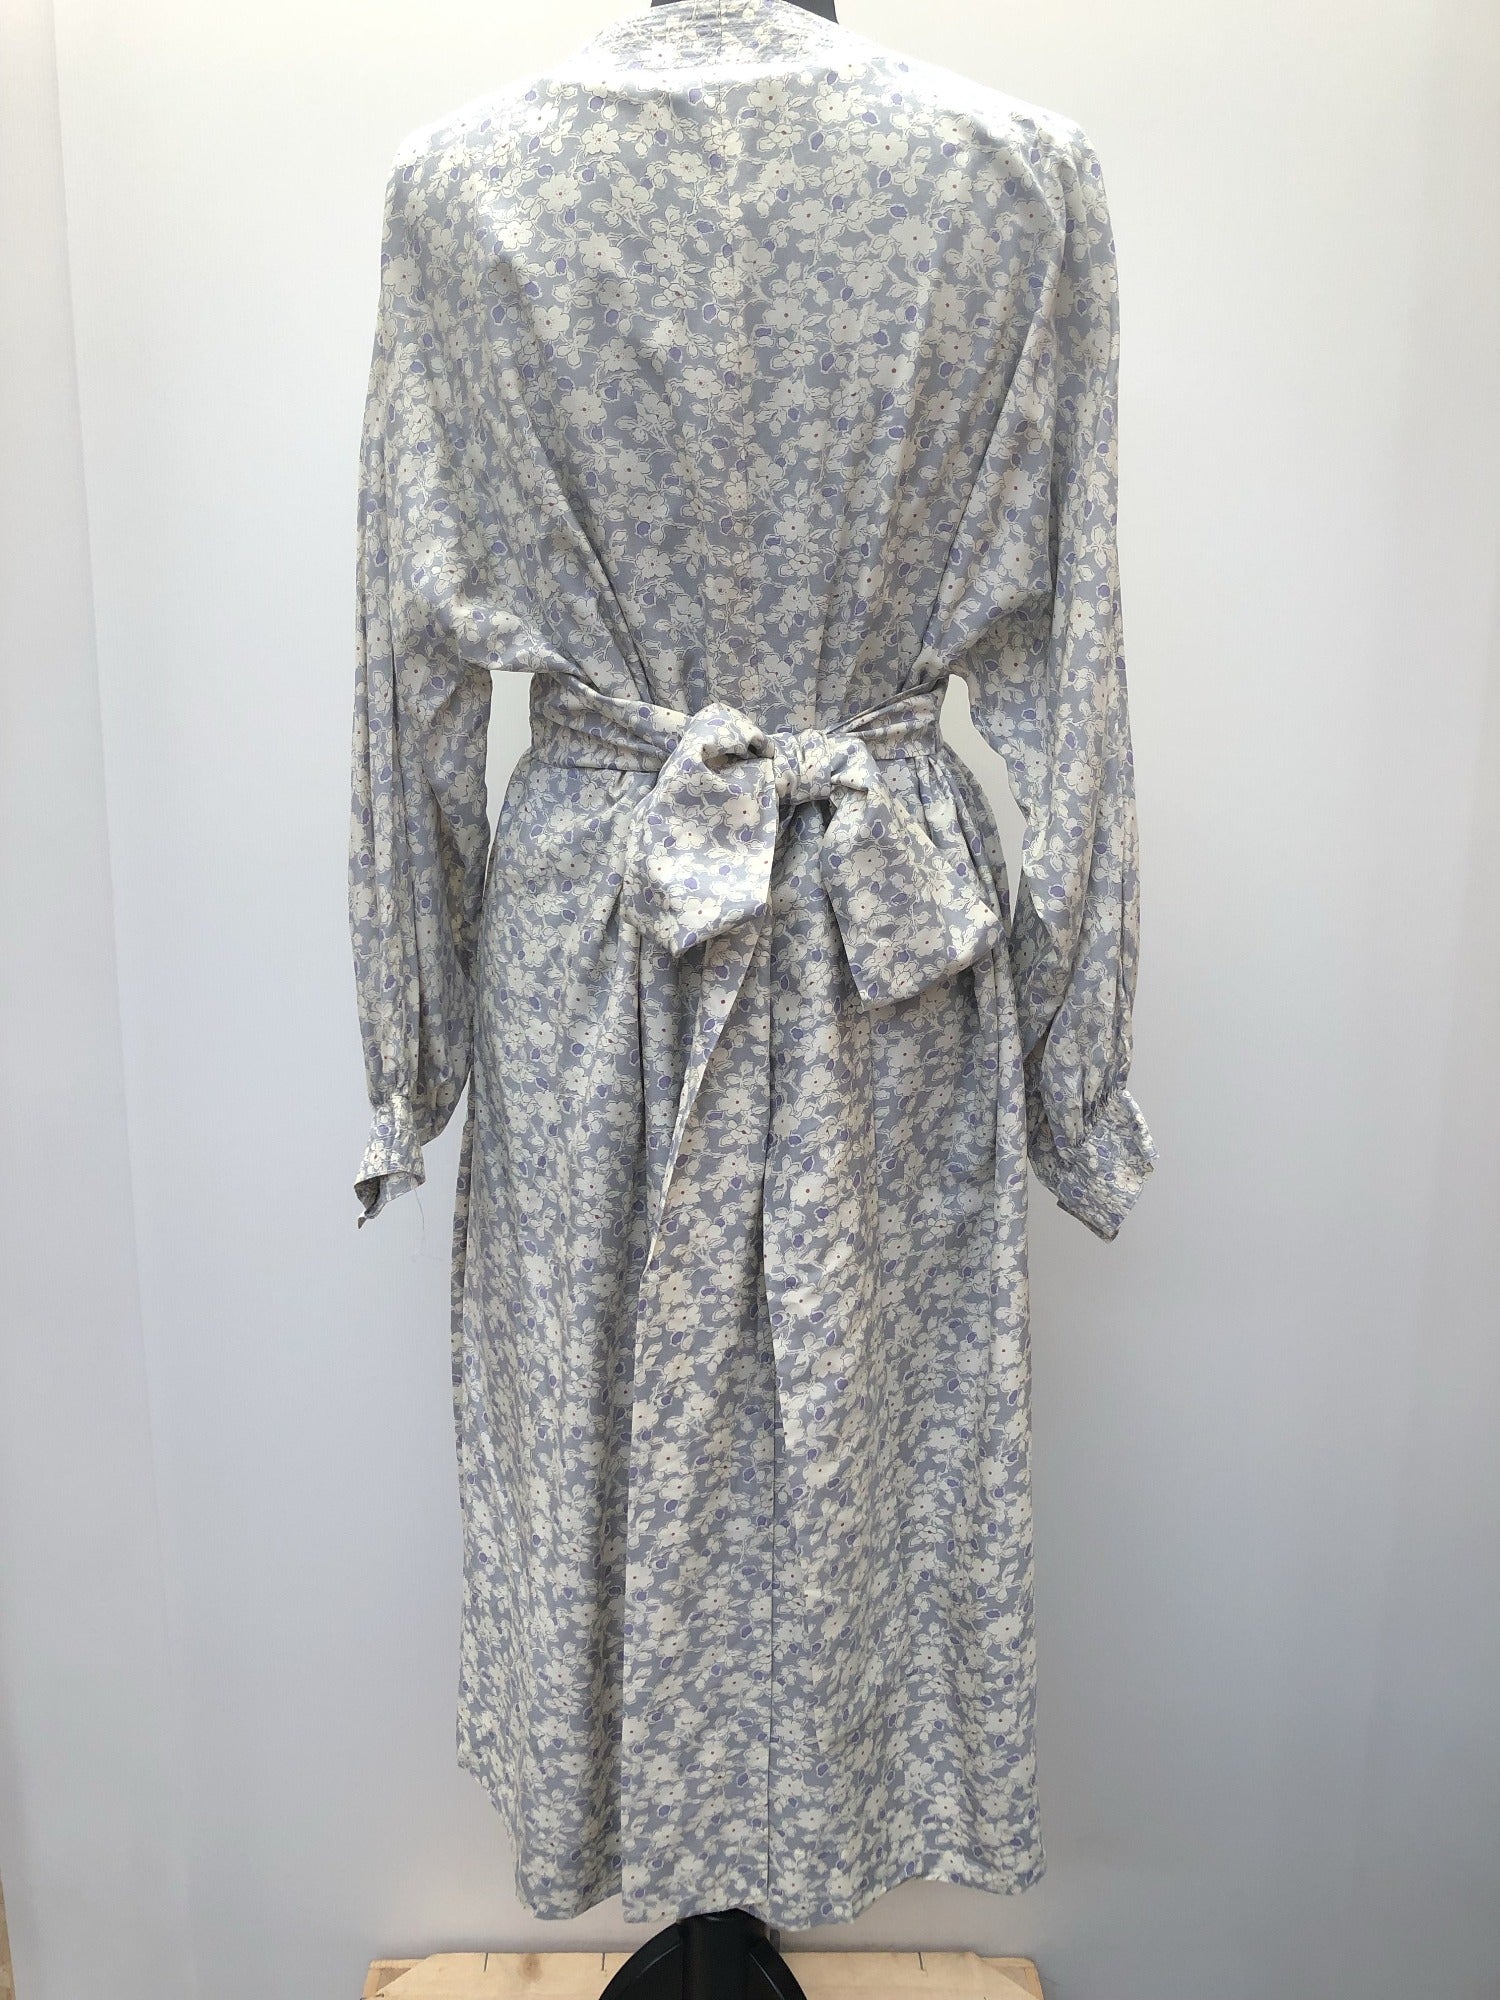 womens  waist belt  vintage  Urban Village Vintage  midi dress  midi  hippie  floral print  dress  check  boho  bohemian  blue  70s